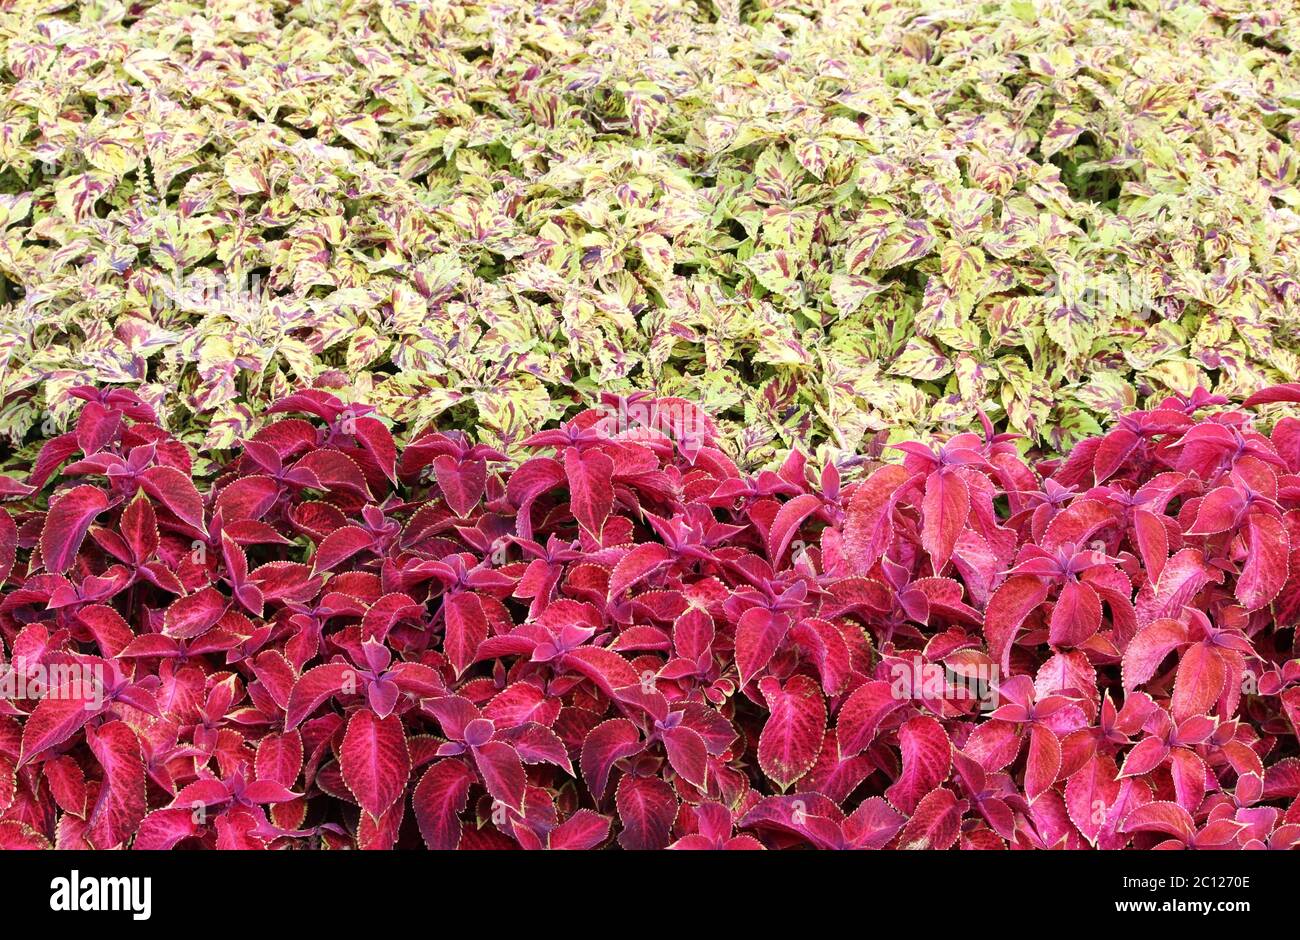 Decorative colorful leaves Plectranthus scutellarioides Coleus blumeii Stock Photo